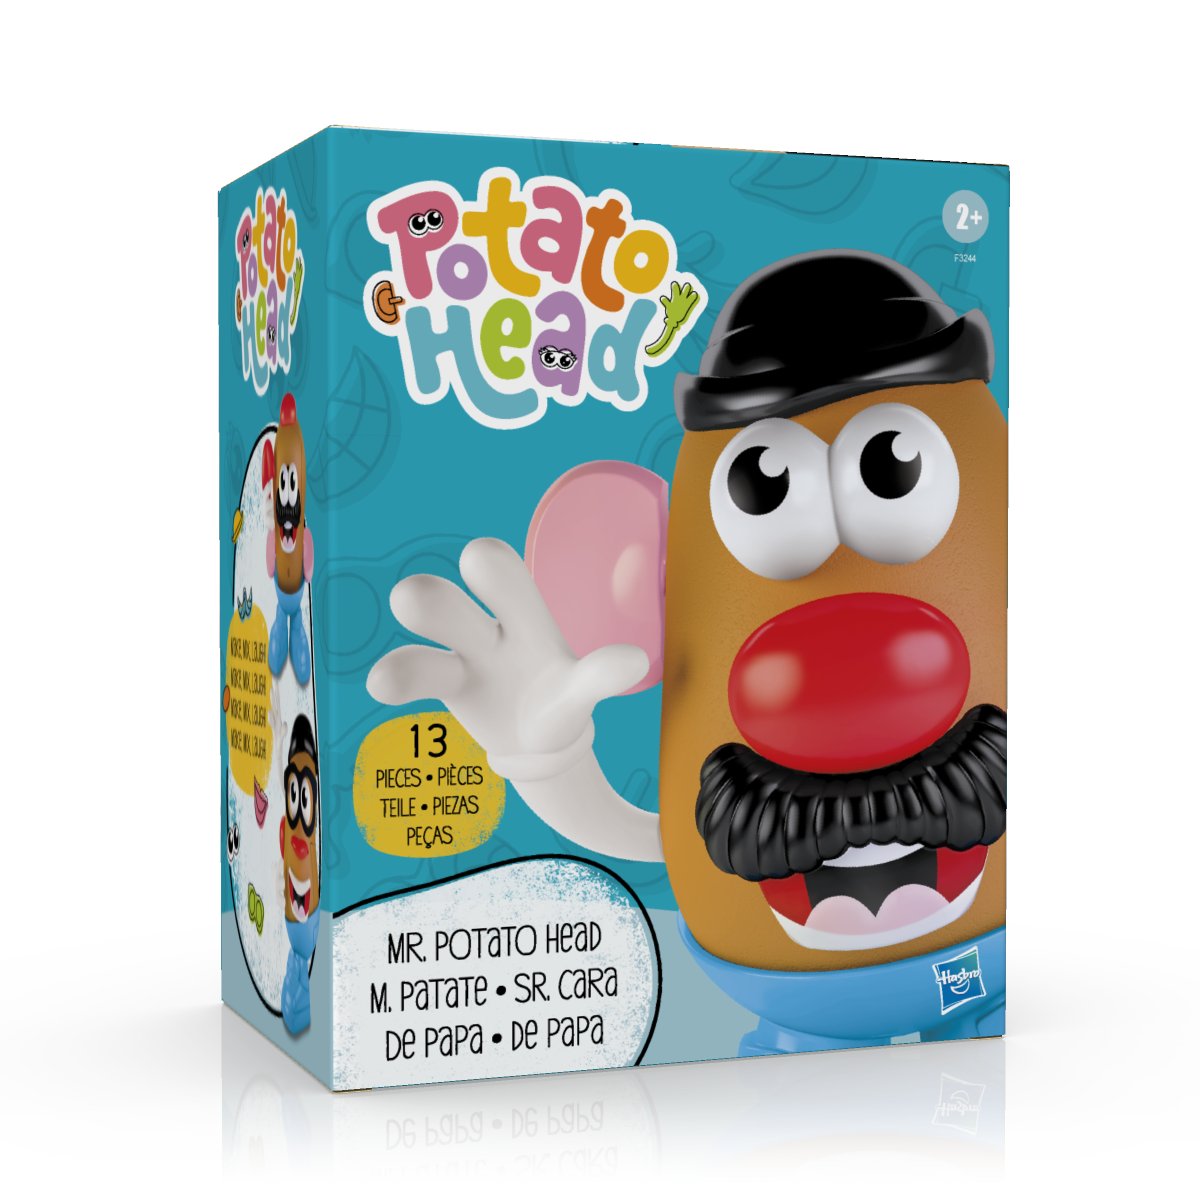 Hasbro's Mr. Potato Head goes gender neutral